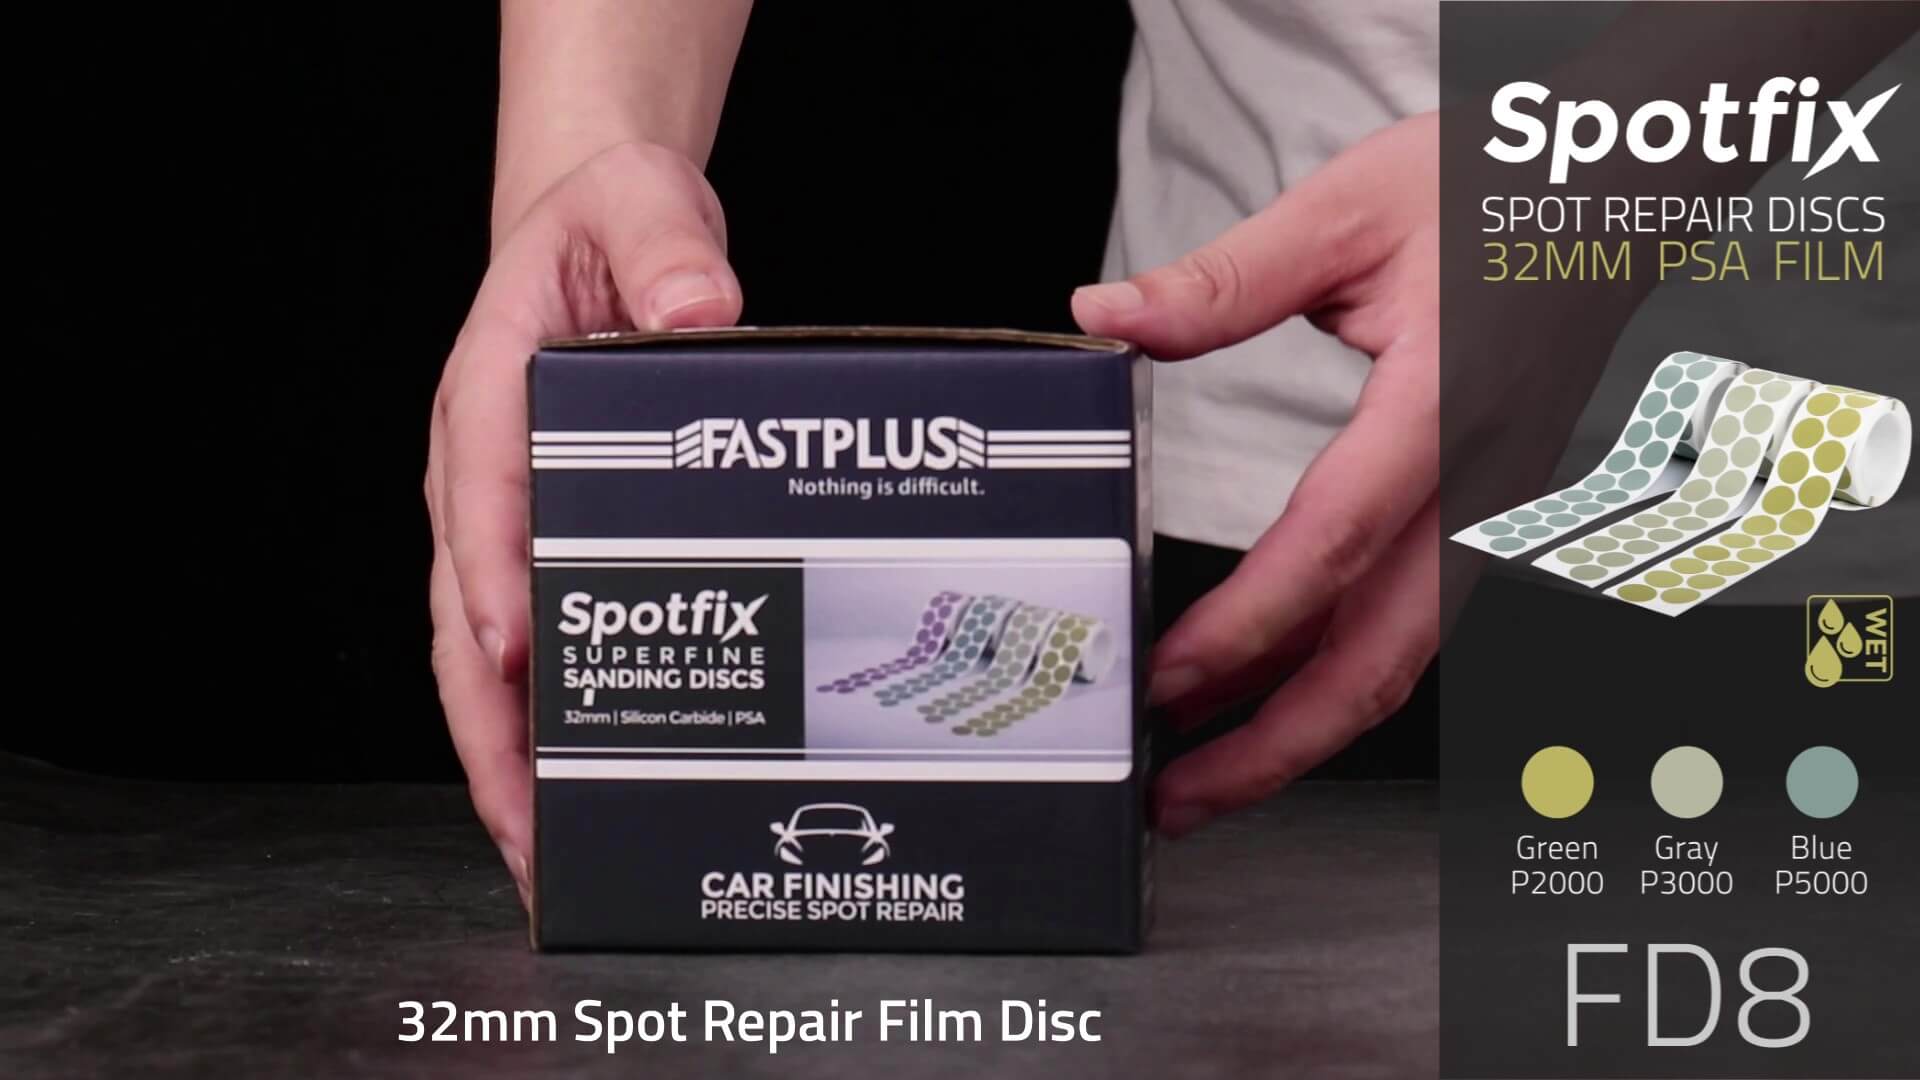 Load video: Spotfix Spot Repair Film Discs FD8 PSA Stick | Remove small clear coat defects | Fastplus Abrasives